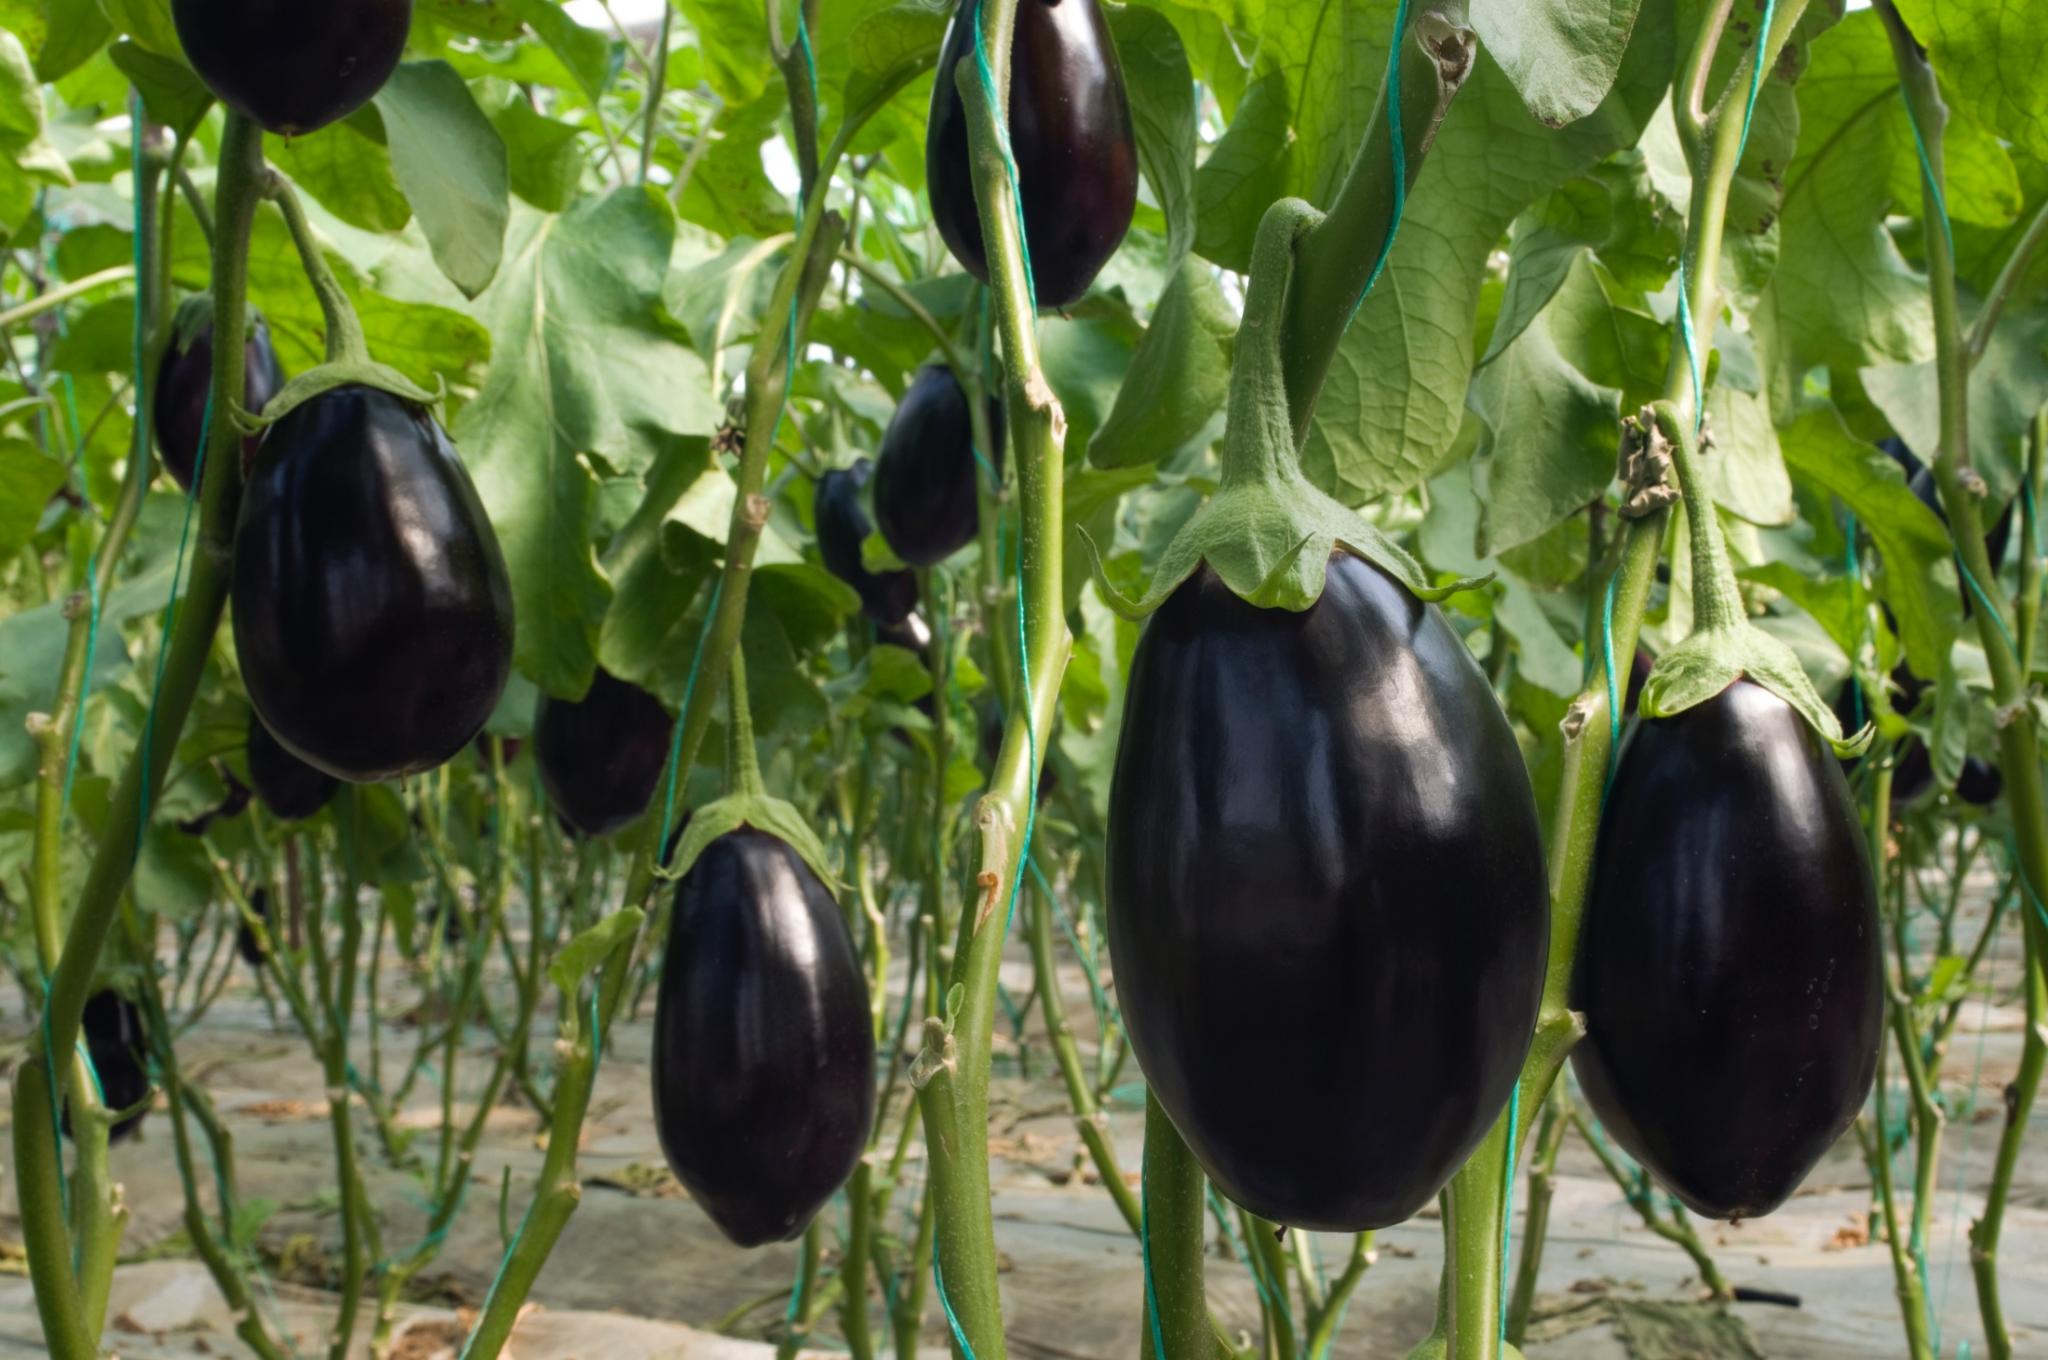 "Eggplants hanging from plants"